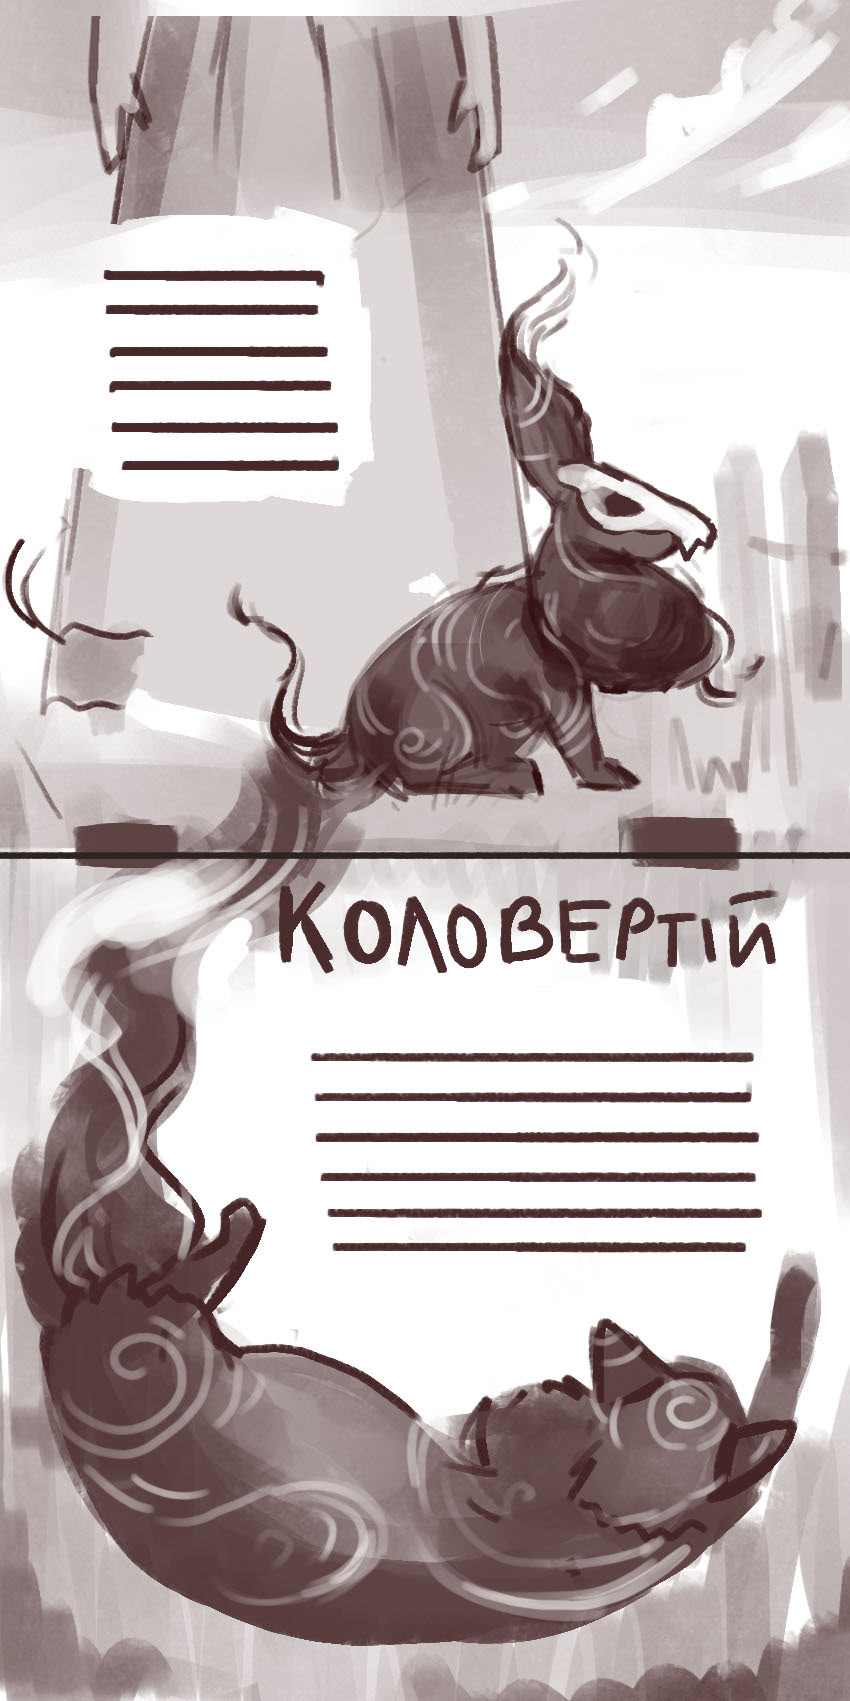 mythology Digital Art  Character design  digital illustration sketch concept art fantasy ukraine ukrainian art